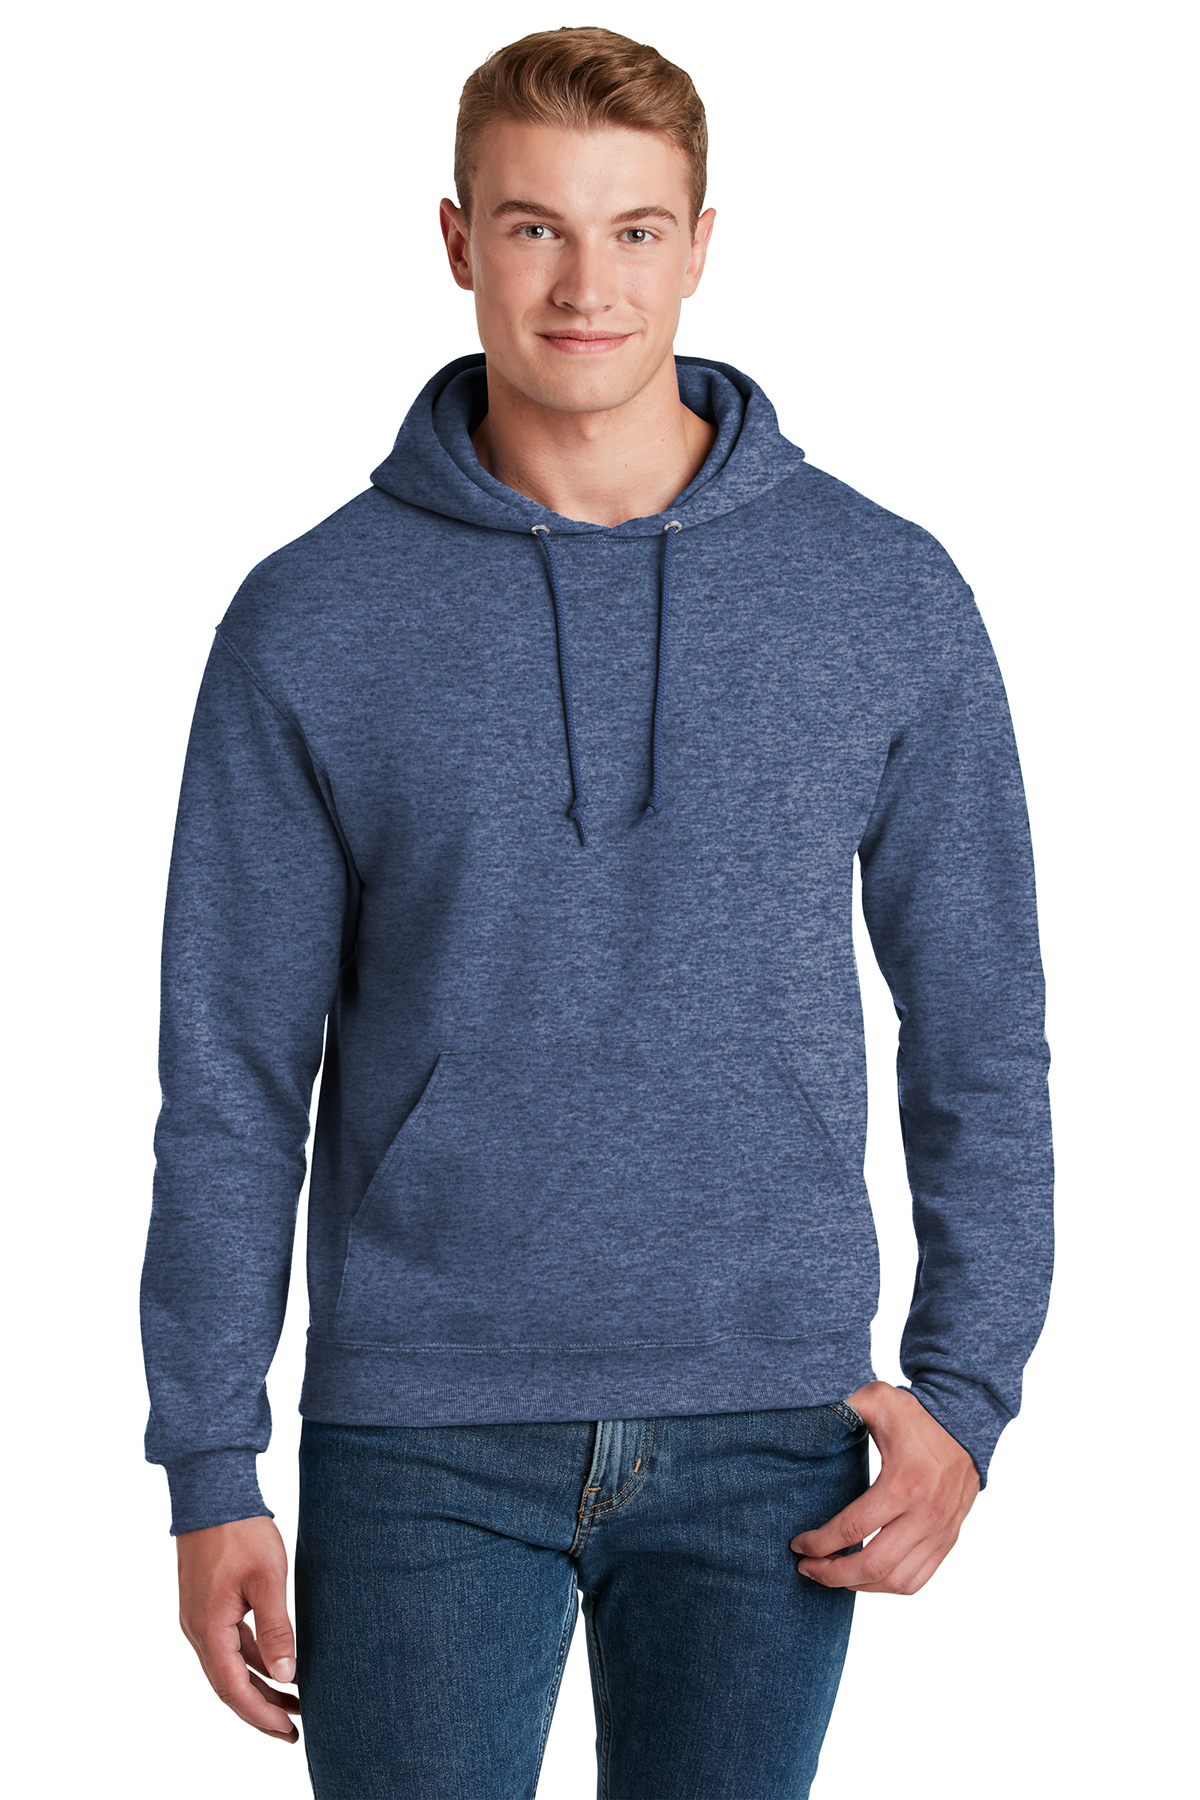 Vintage Heather Blue, Jerzees Mens Adult Pullover Hooded Sweatshirt